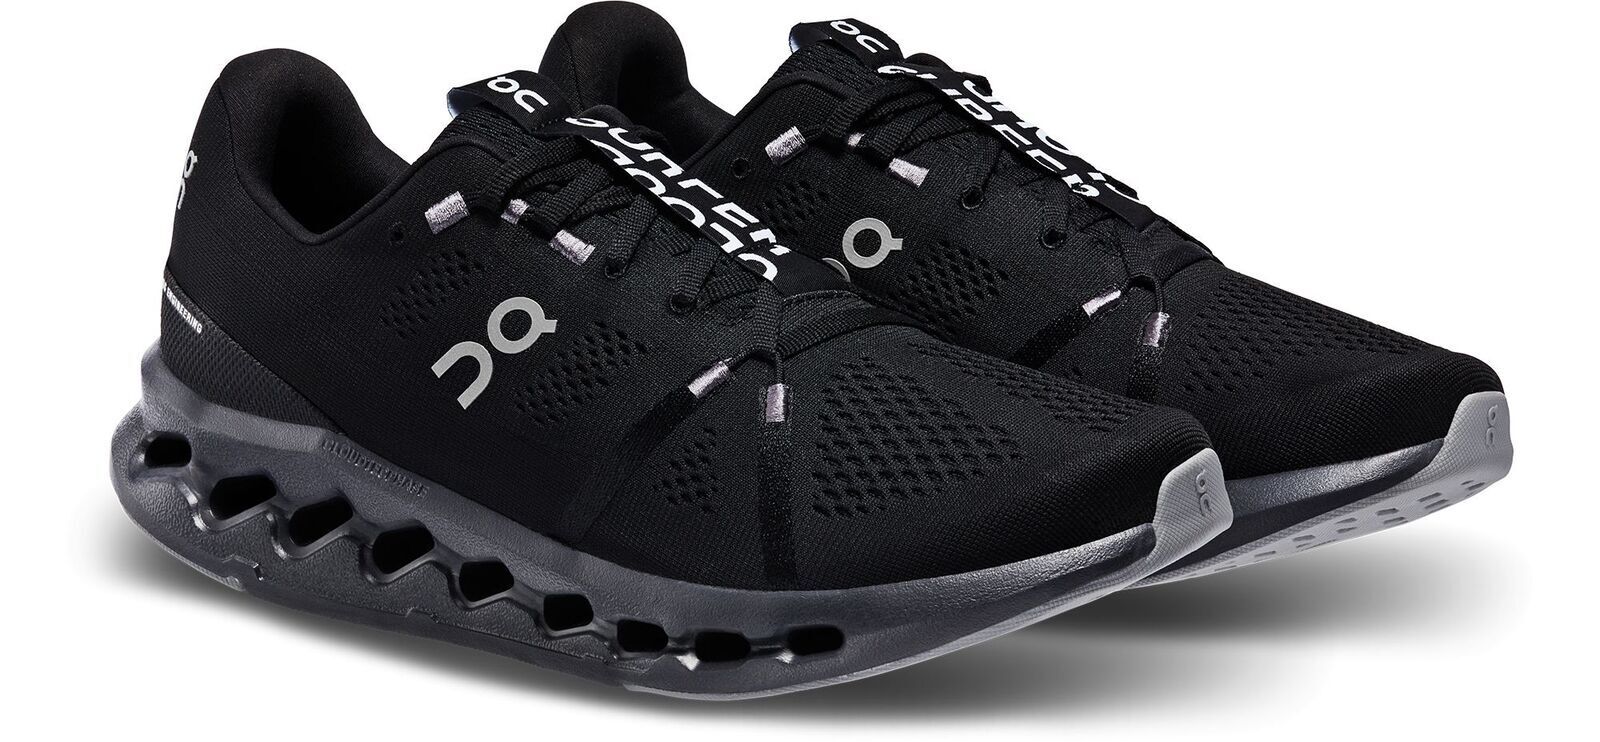 NEW Men's On Brand Black Cloudsurfer Shoes Cloud CloudTec OC Cushion Sneakers m/